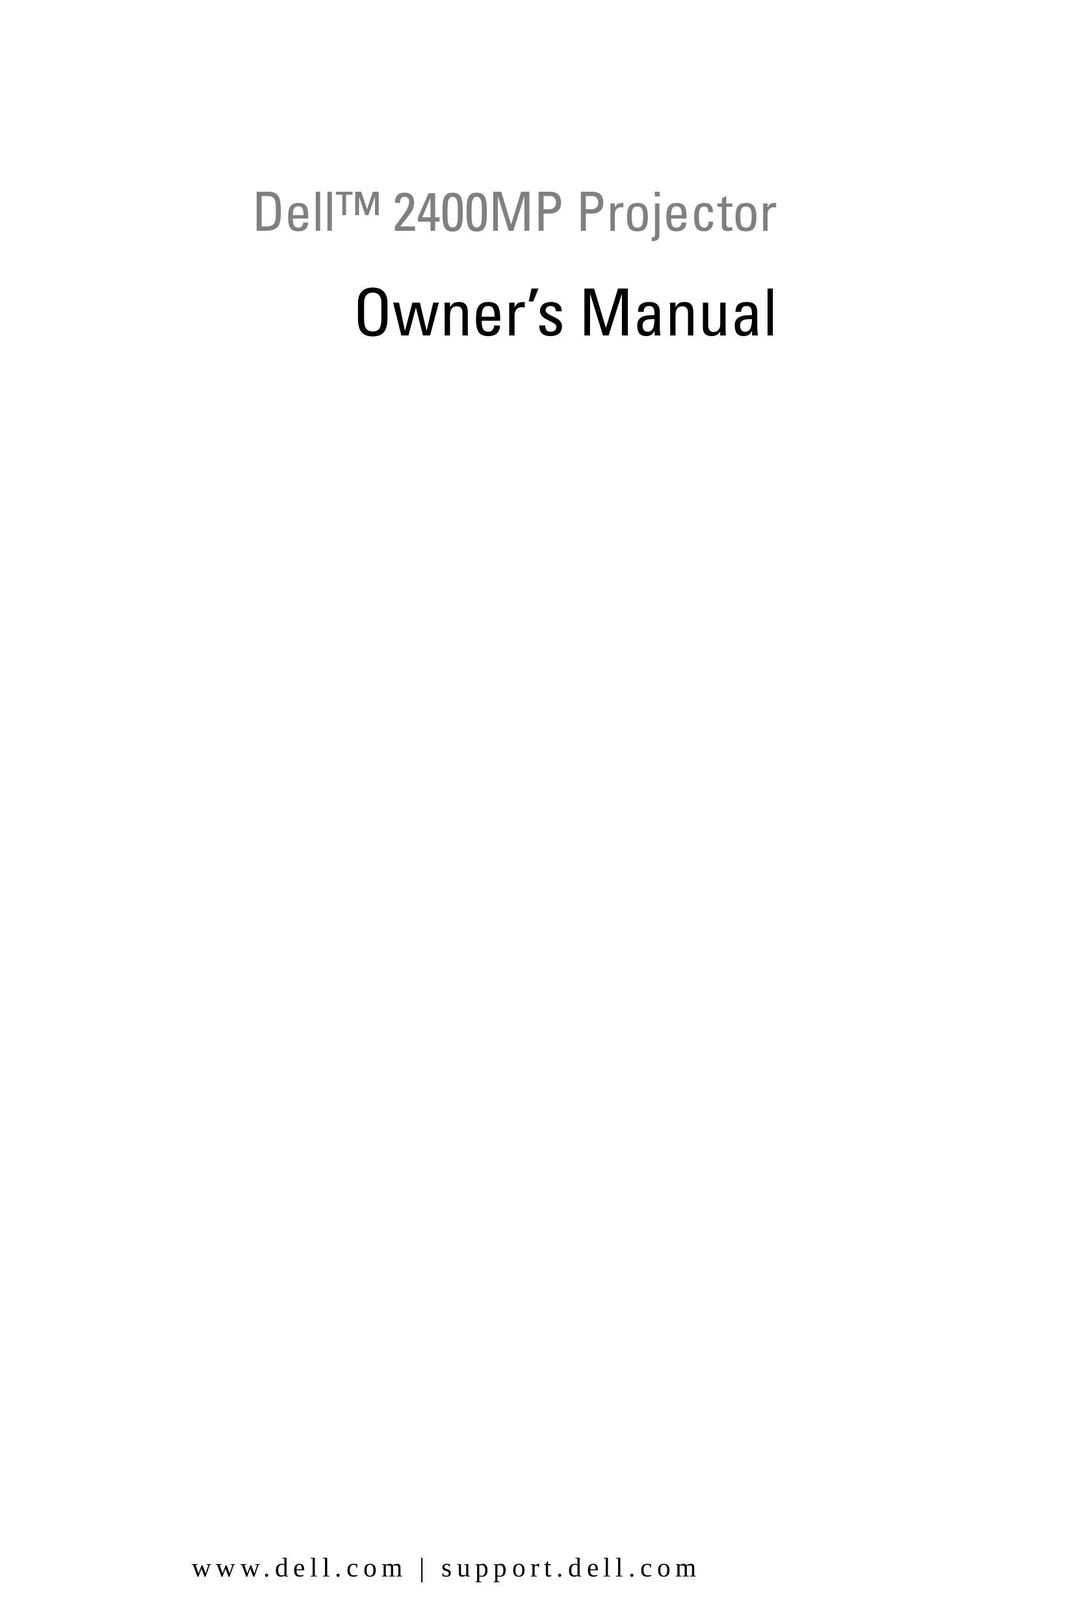 Dell 2400MP Projector User Manual